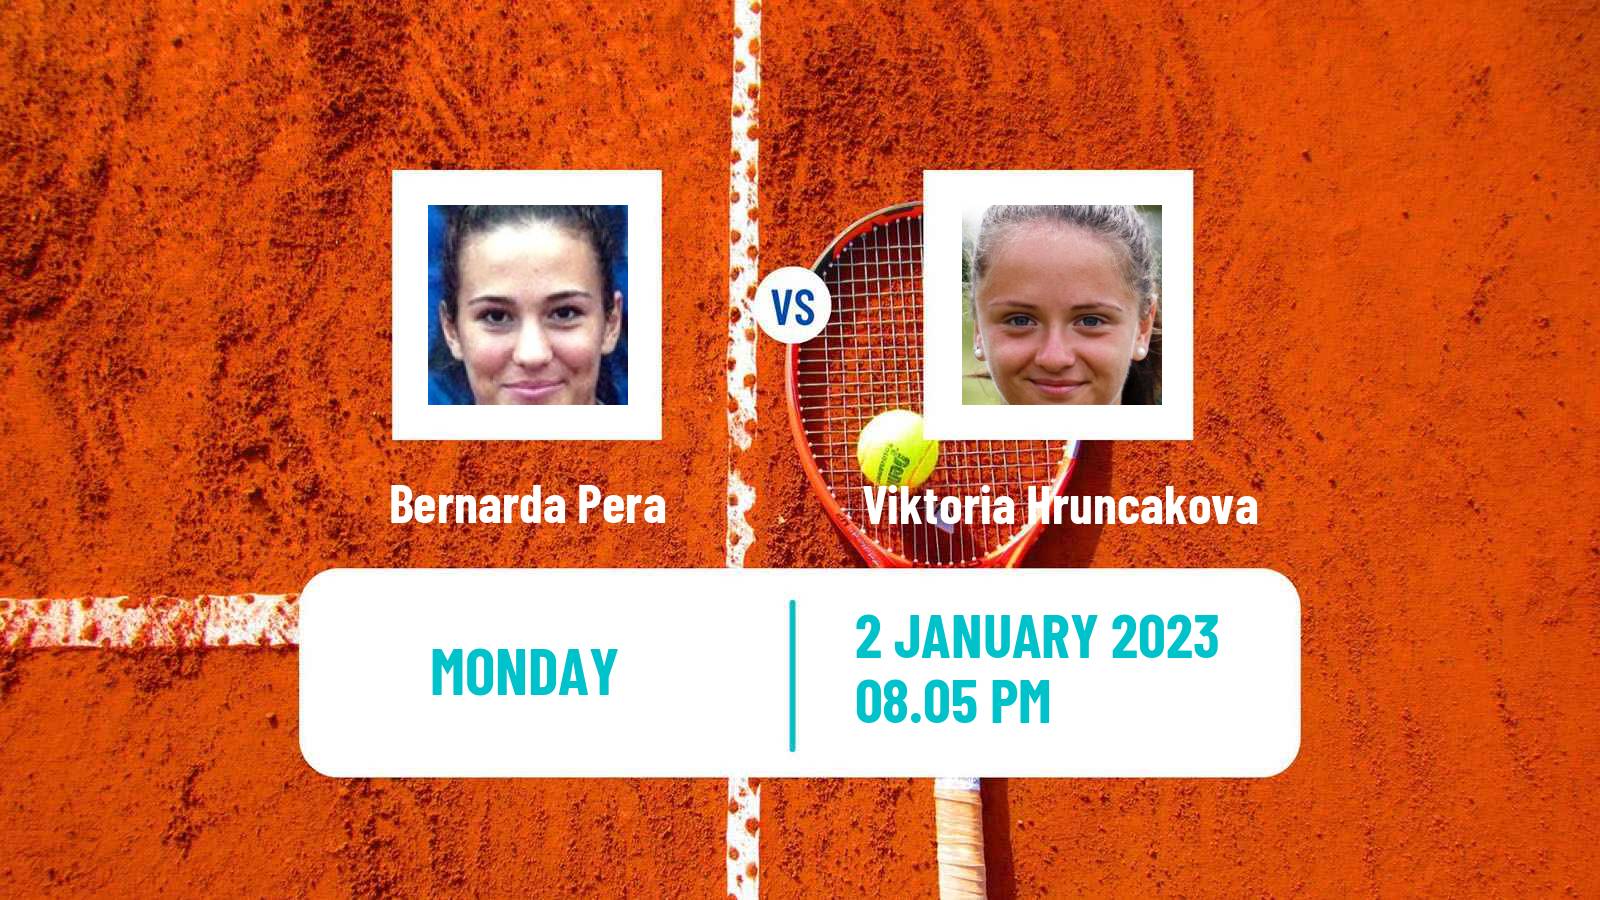 Tennis WTA Auckland Bernarda Pera - Viktoria Hruncakova